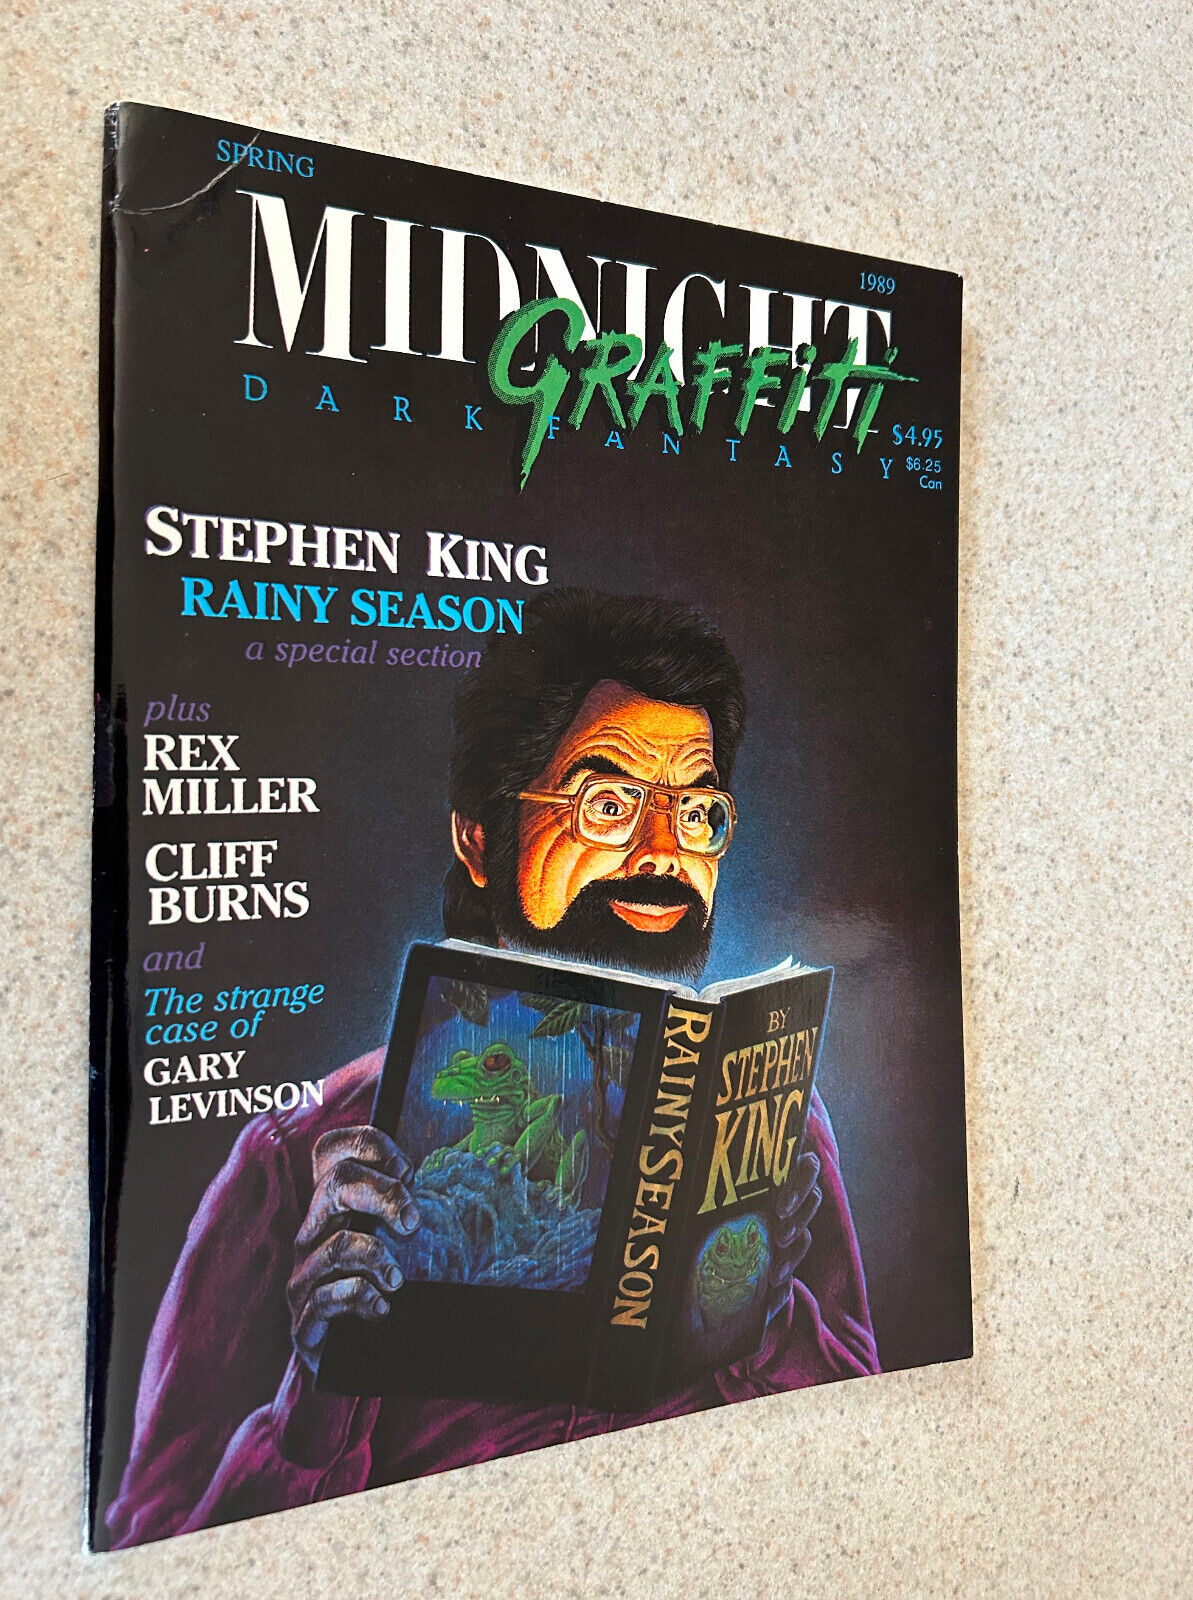 MIDNIGHT GRAFFITI HORROR MAGAZINE (1989) -- Stephen King Story